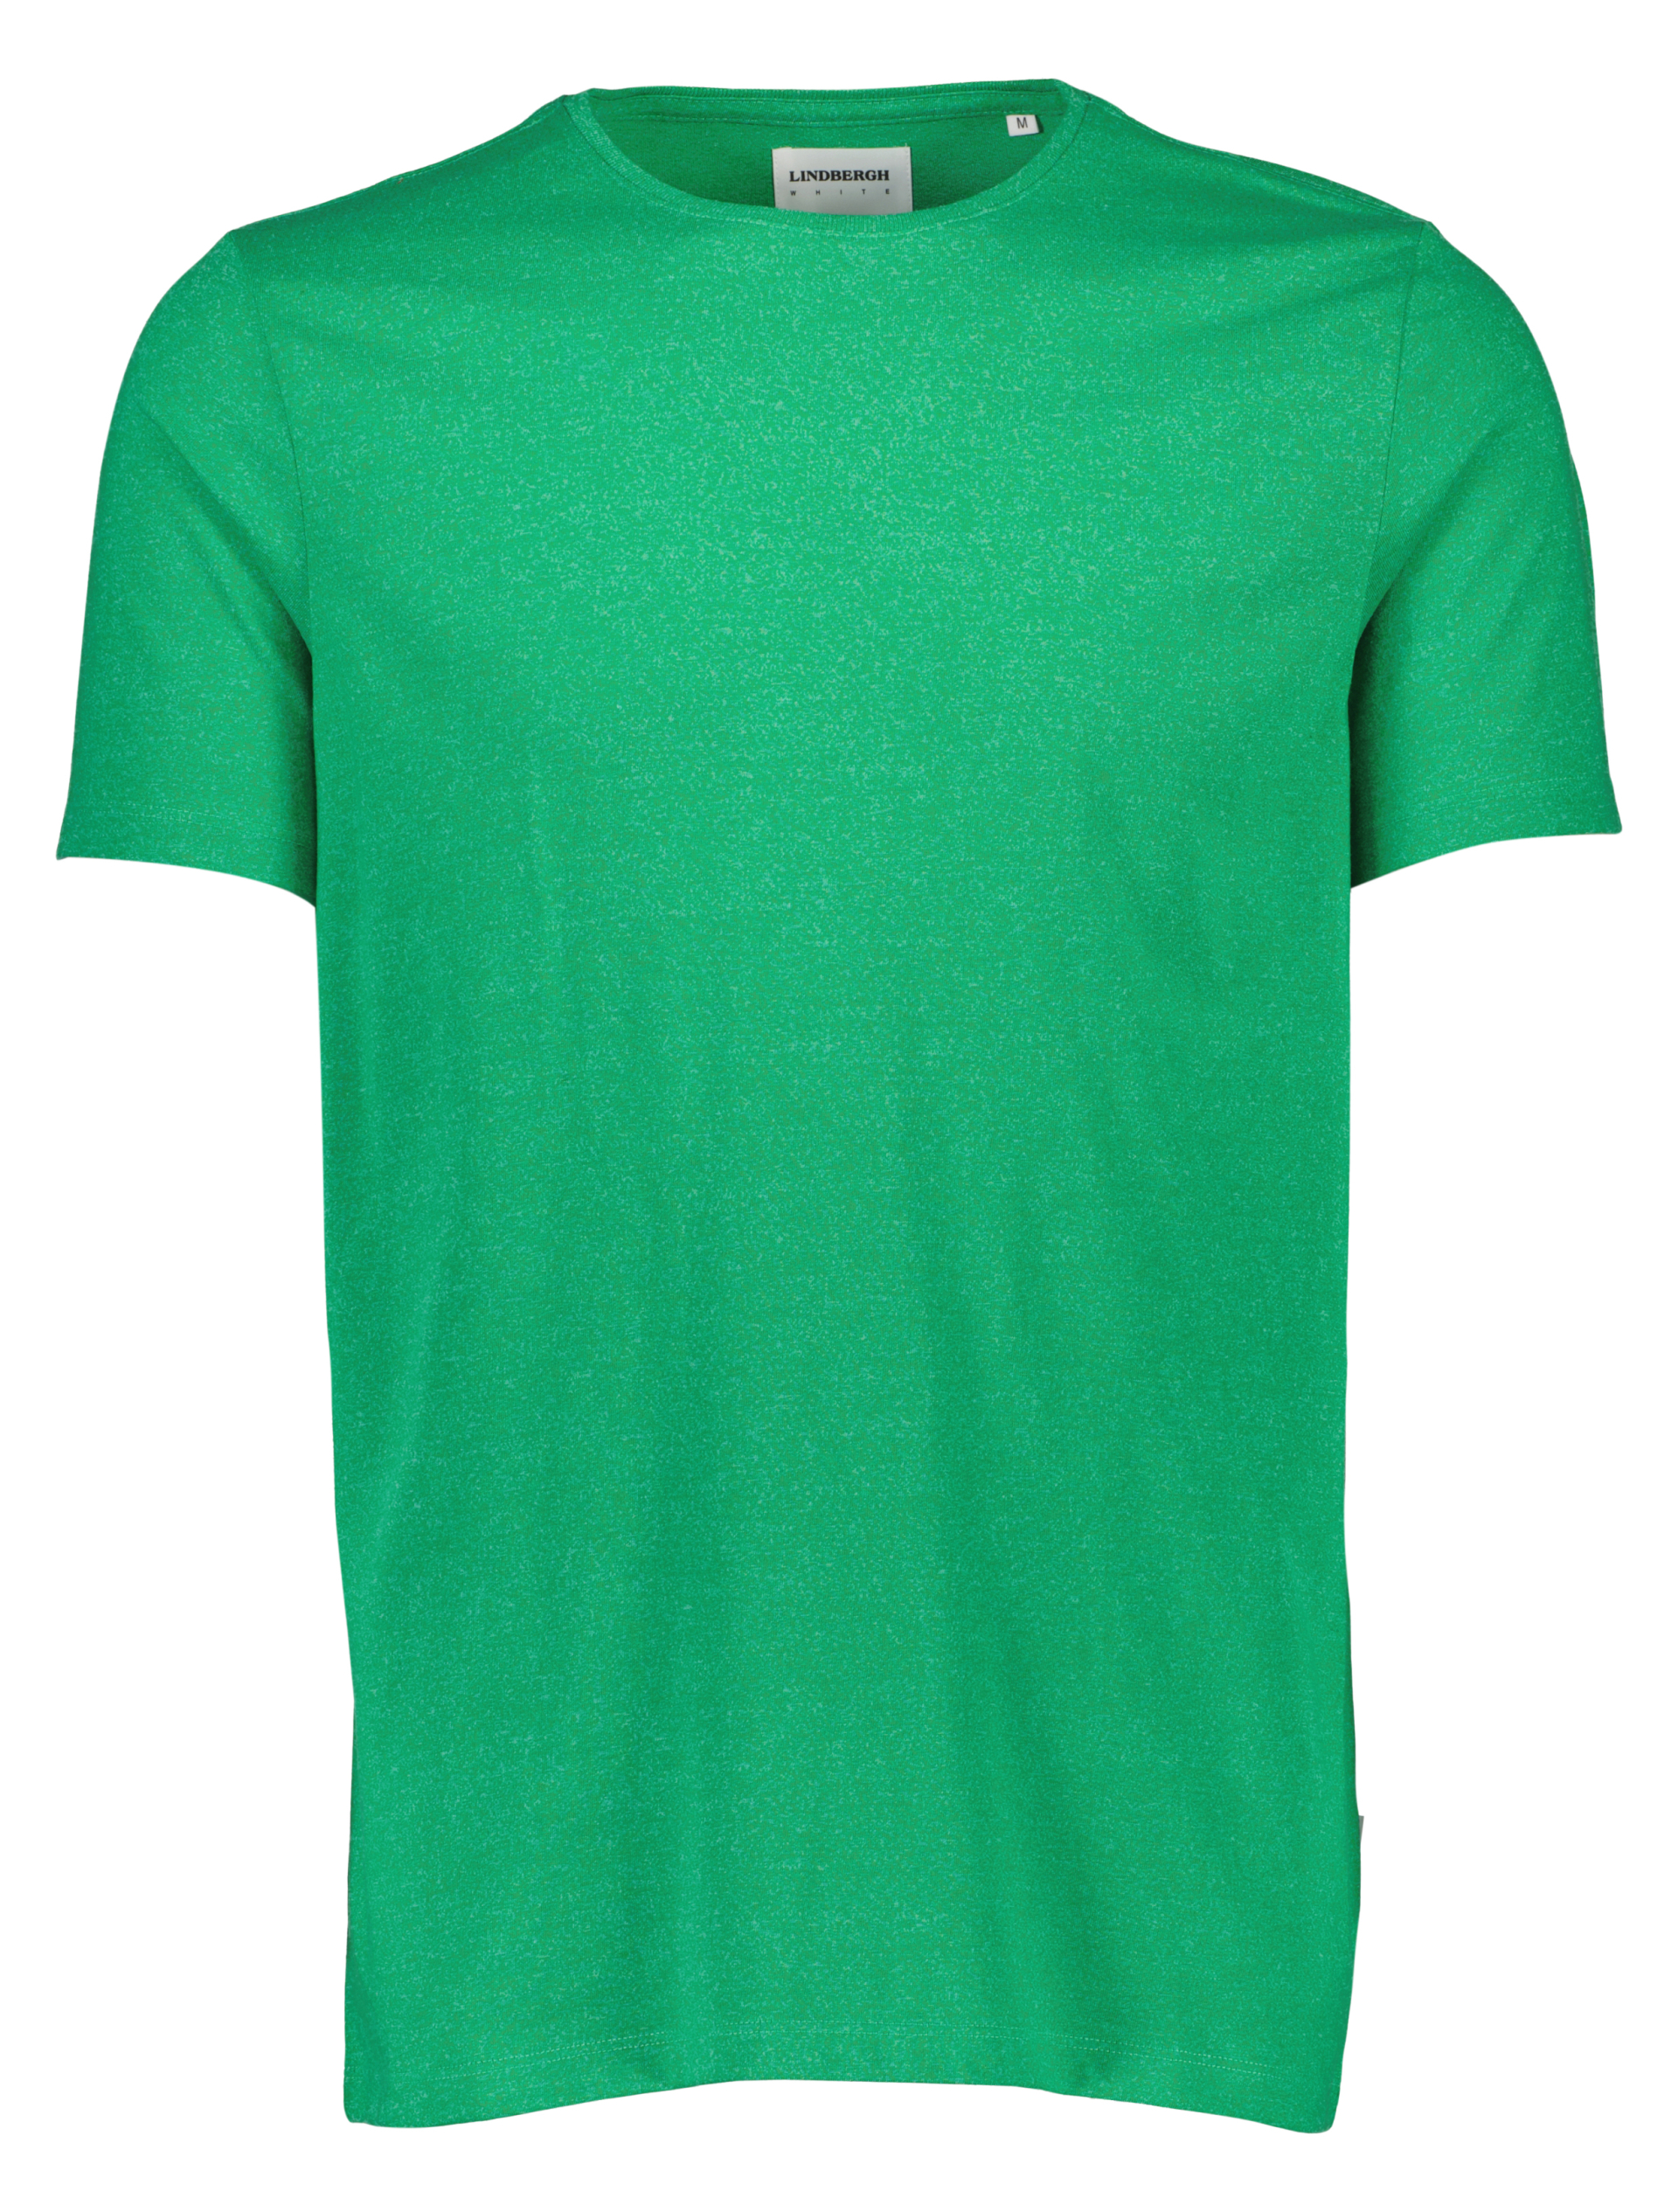 Lindbergh T-shirt grøn / bright green mix 323